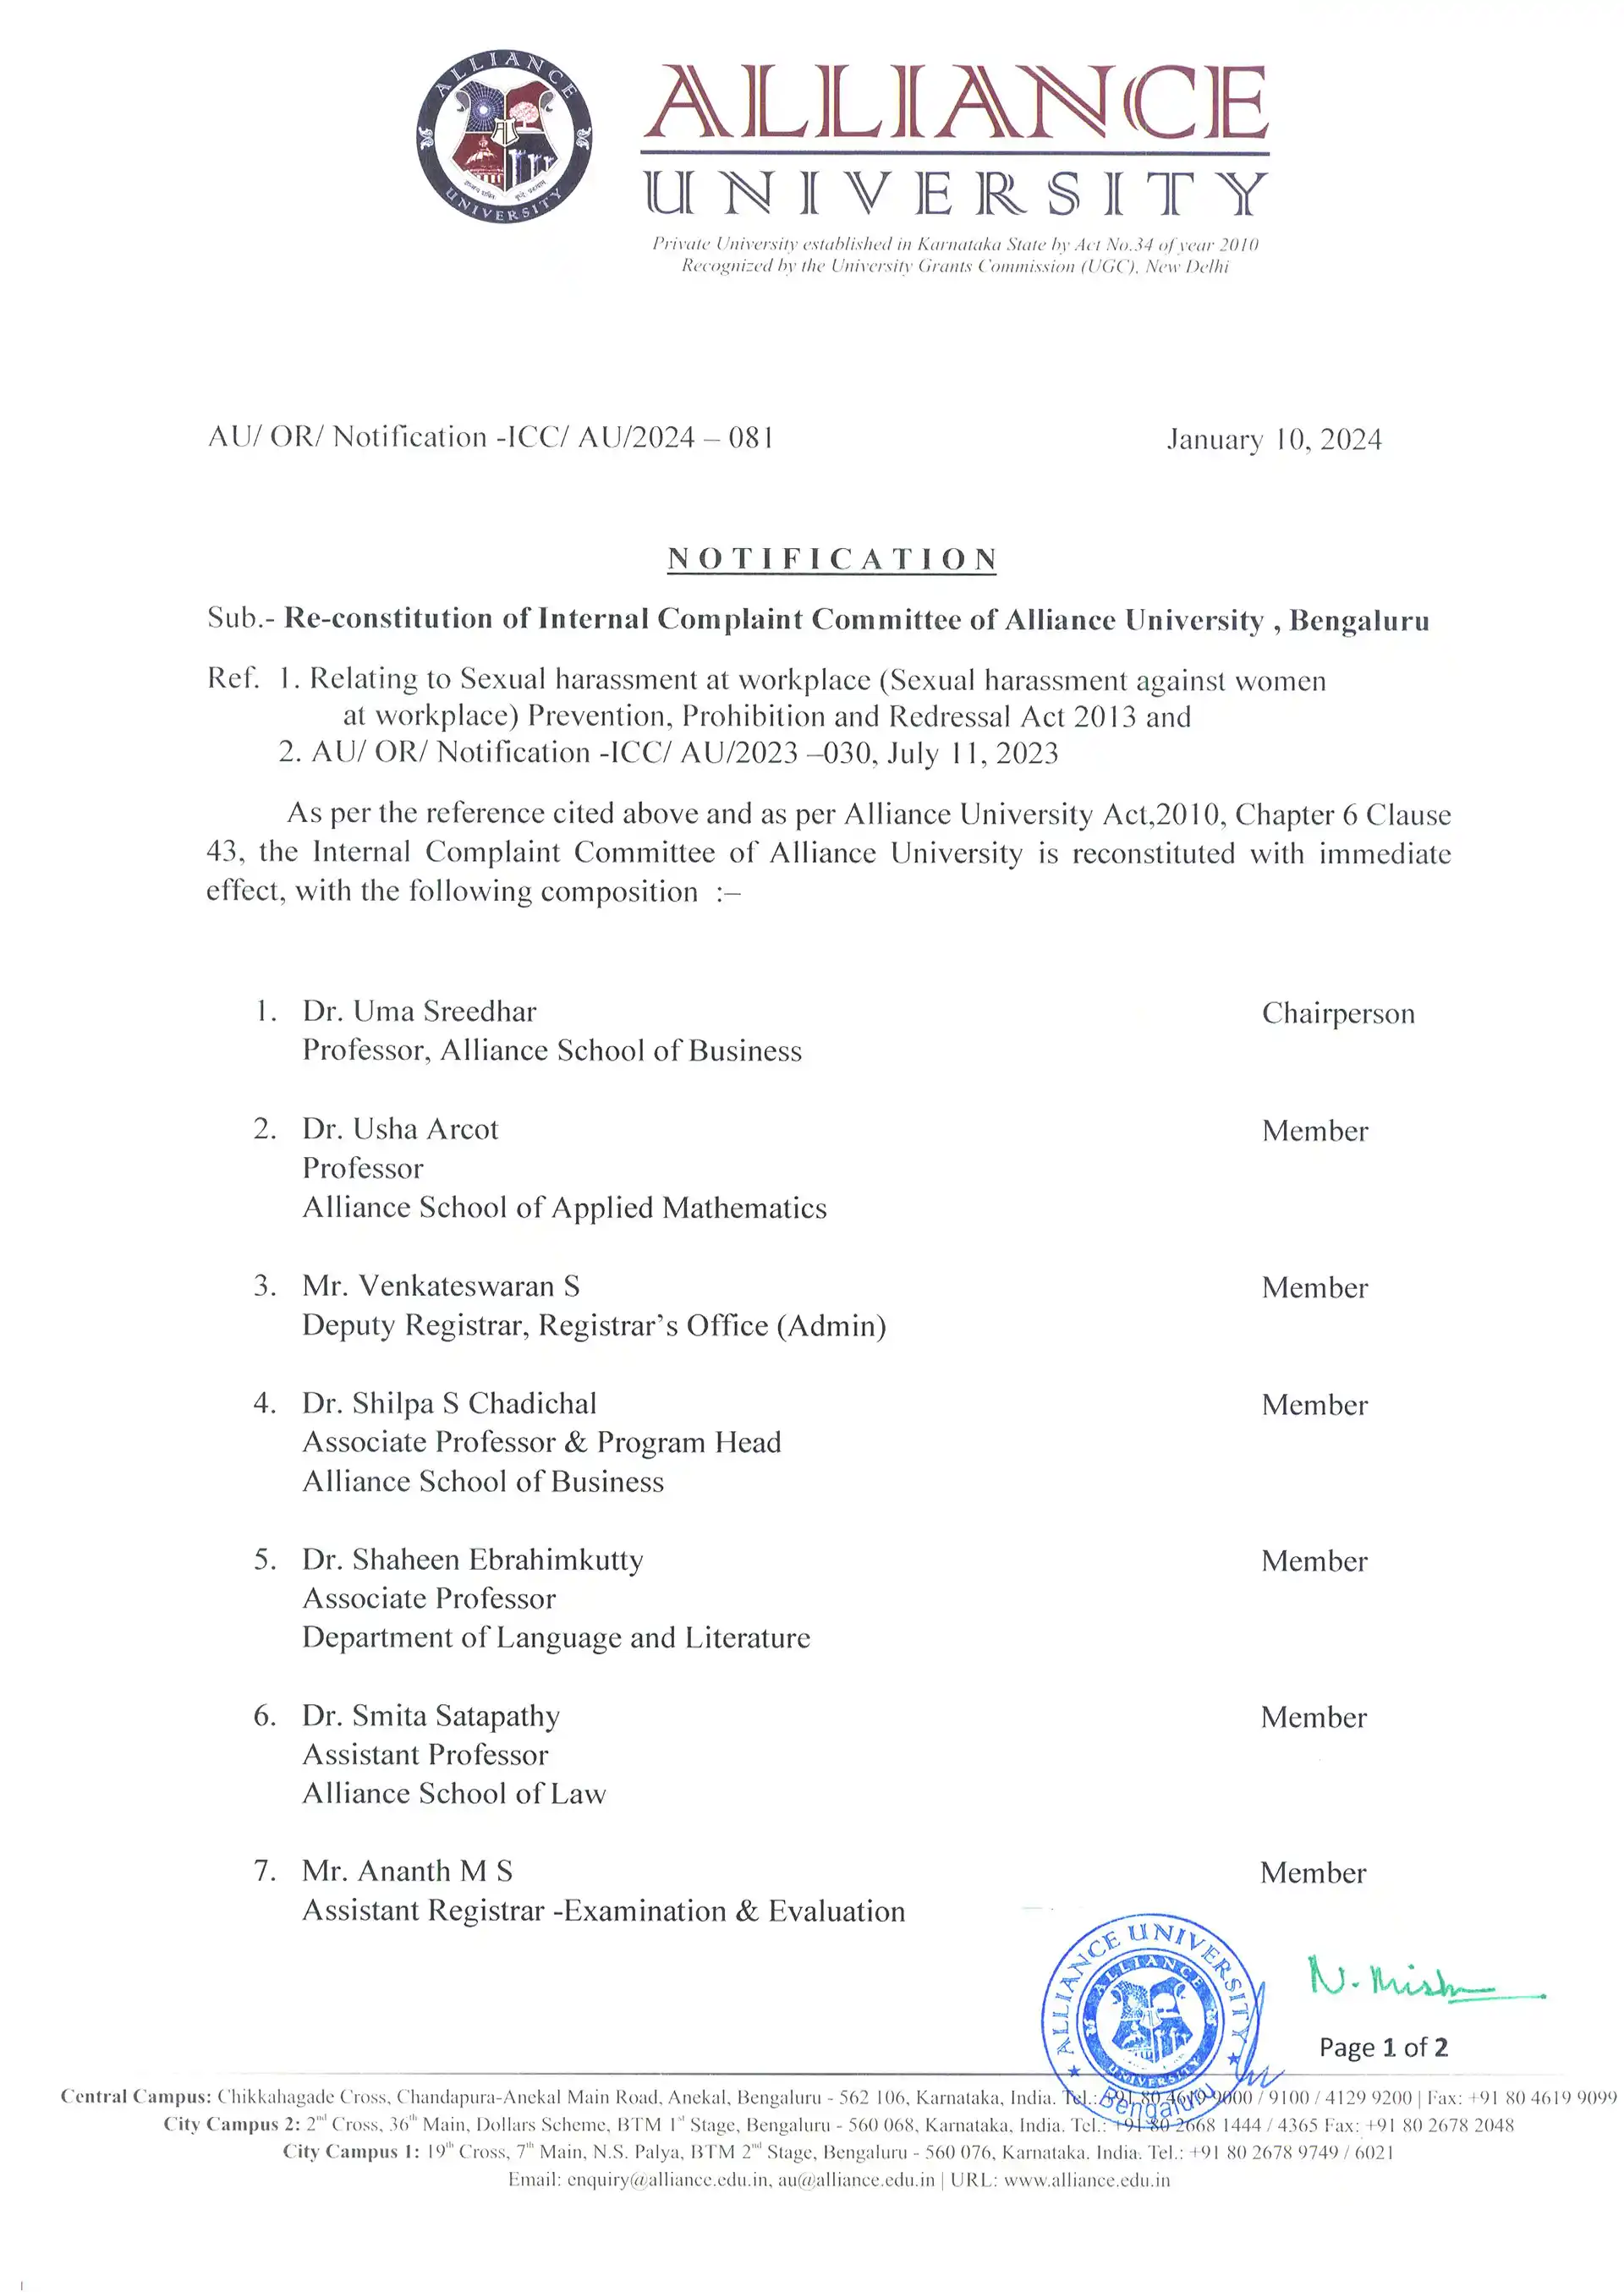 Reconstitution of Internal Complaint Committee of Alliance University, Bengaluru - 1